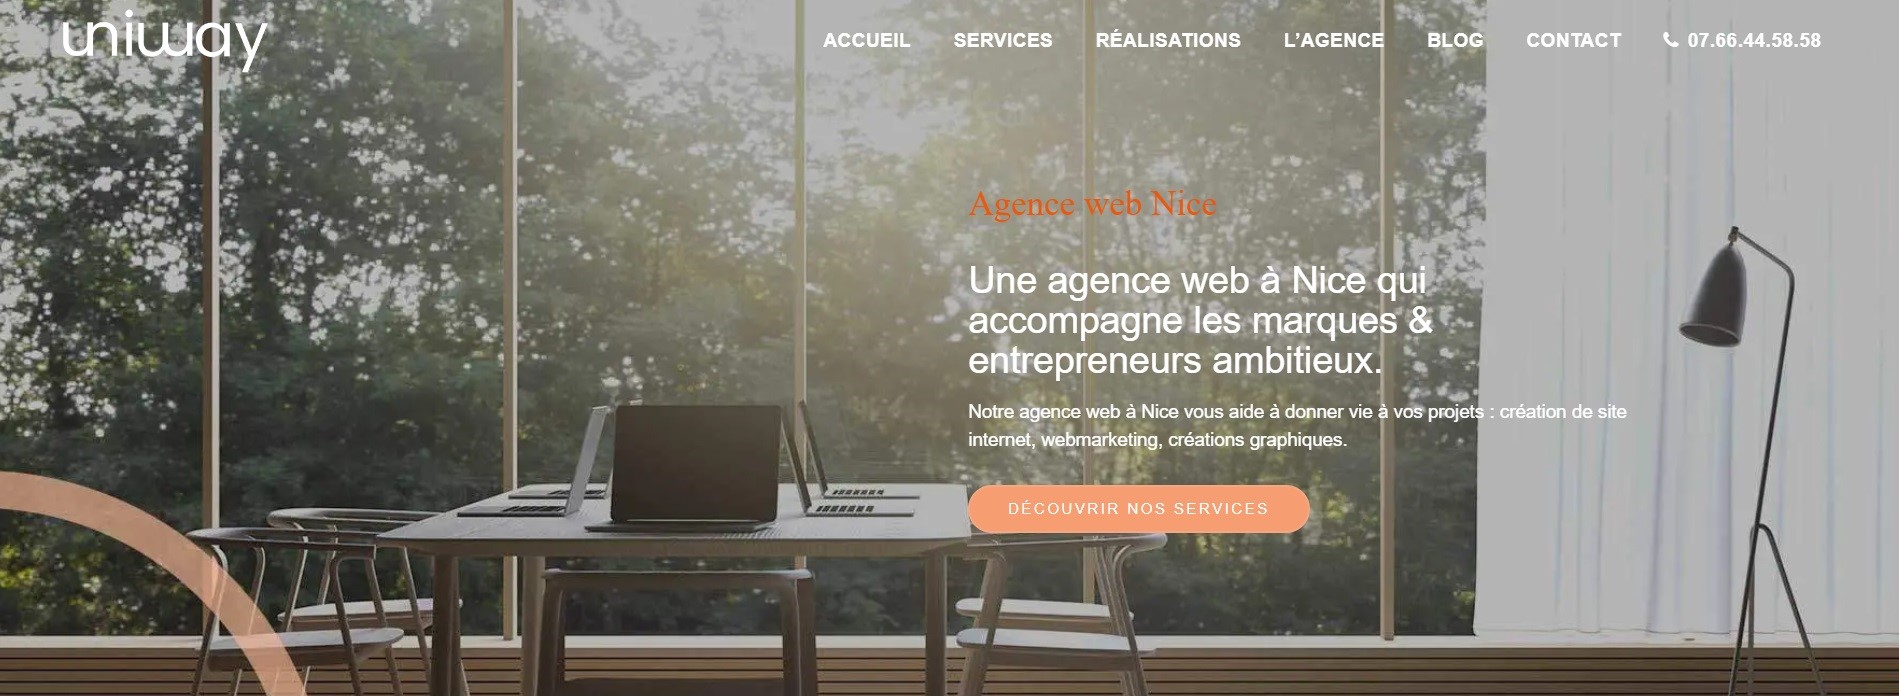  Uniway - Agence Web à Nice